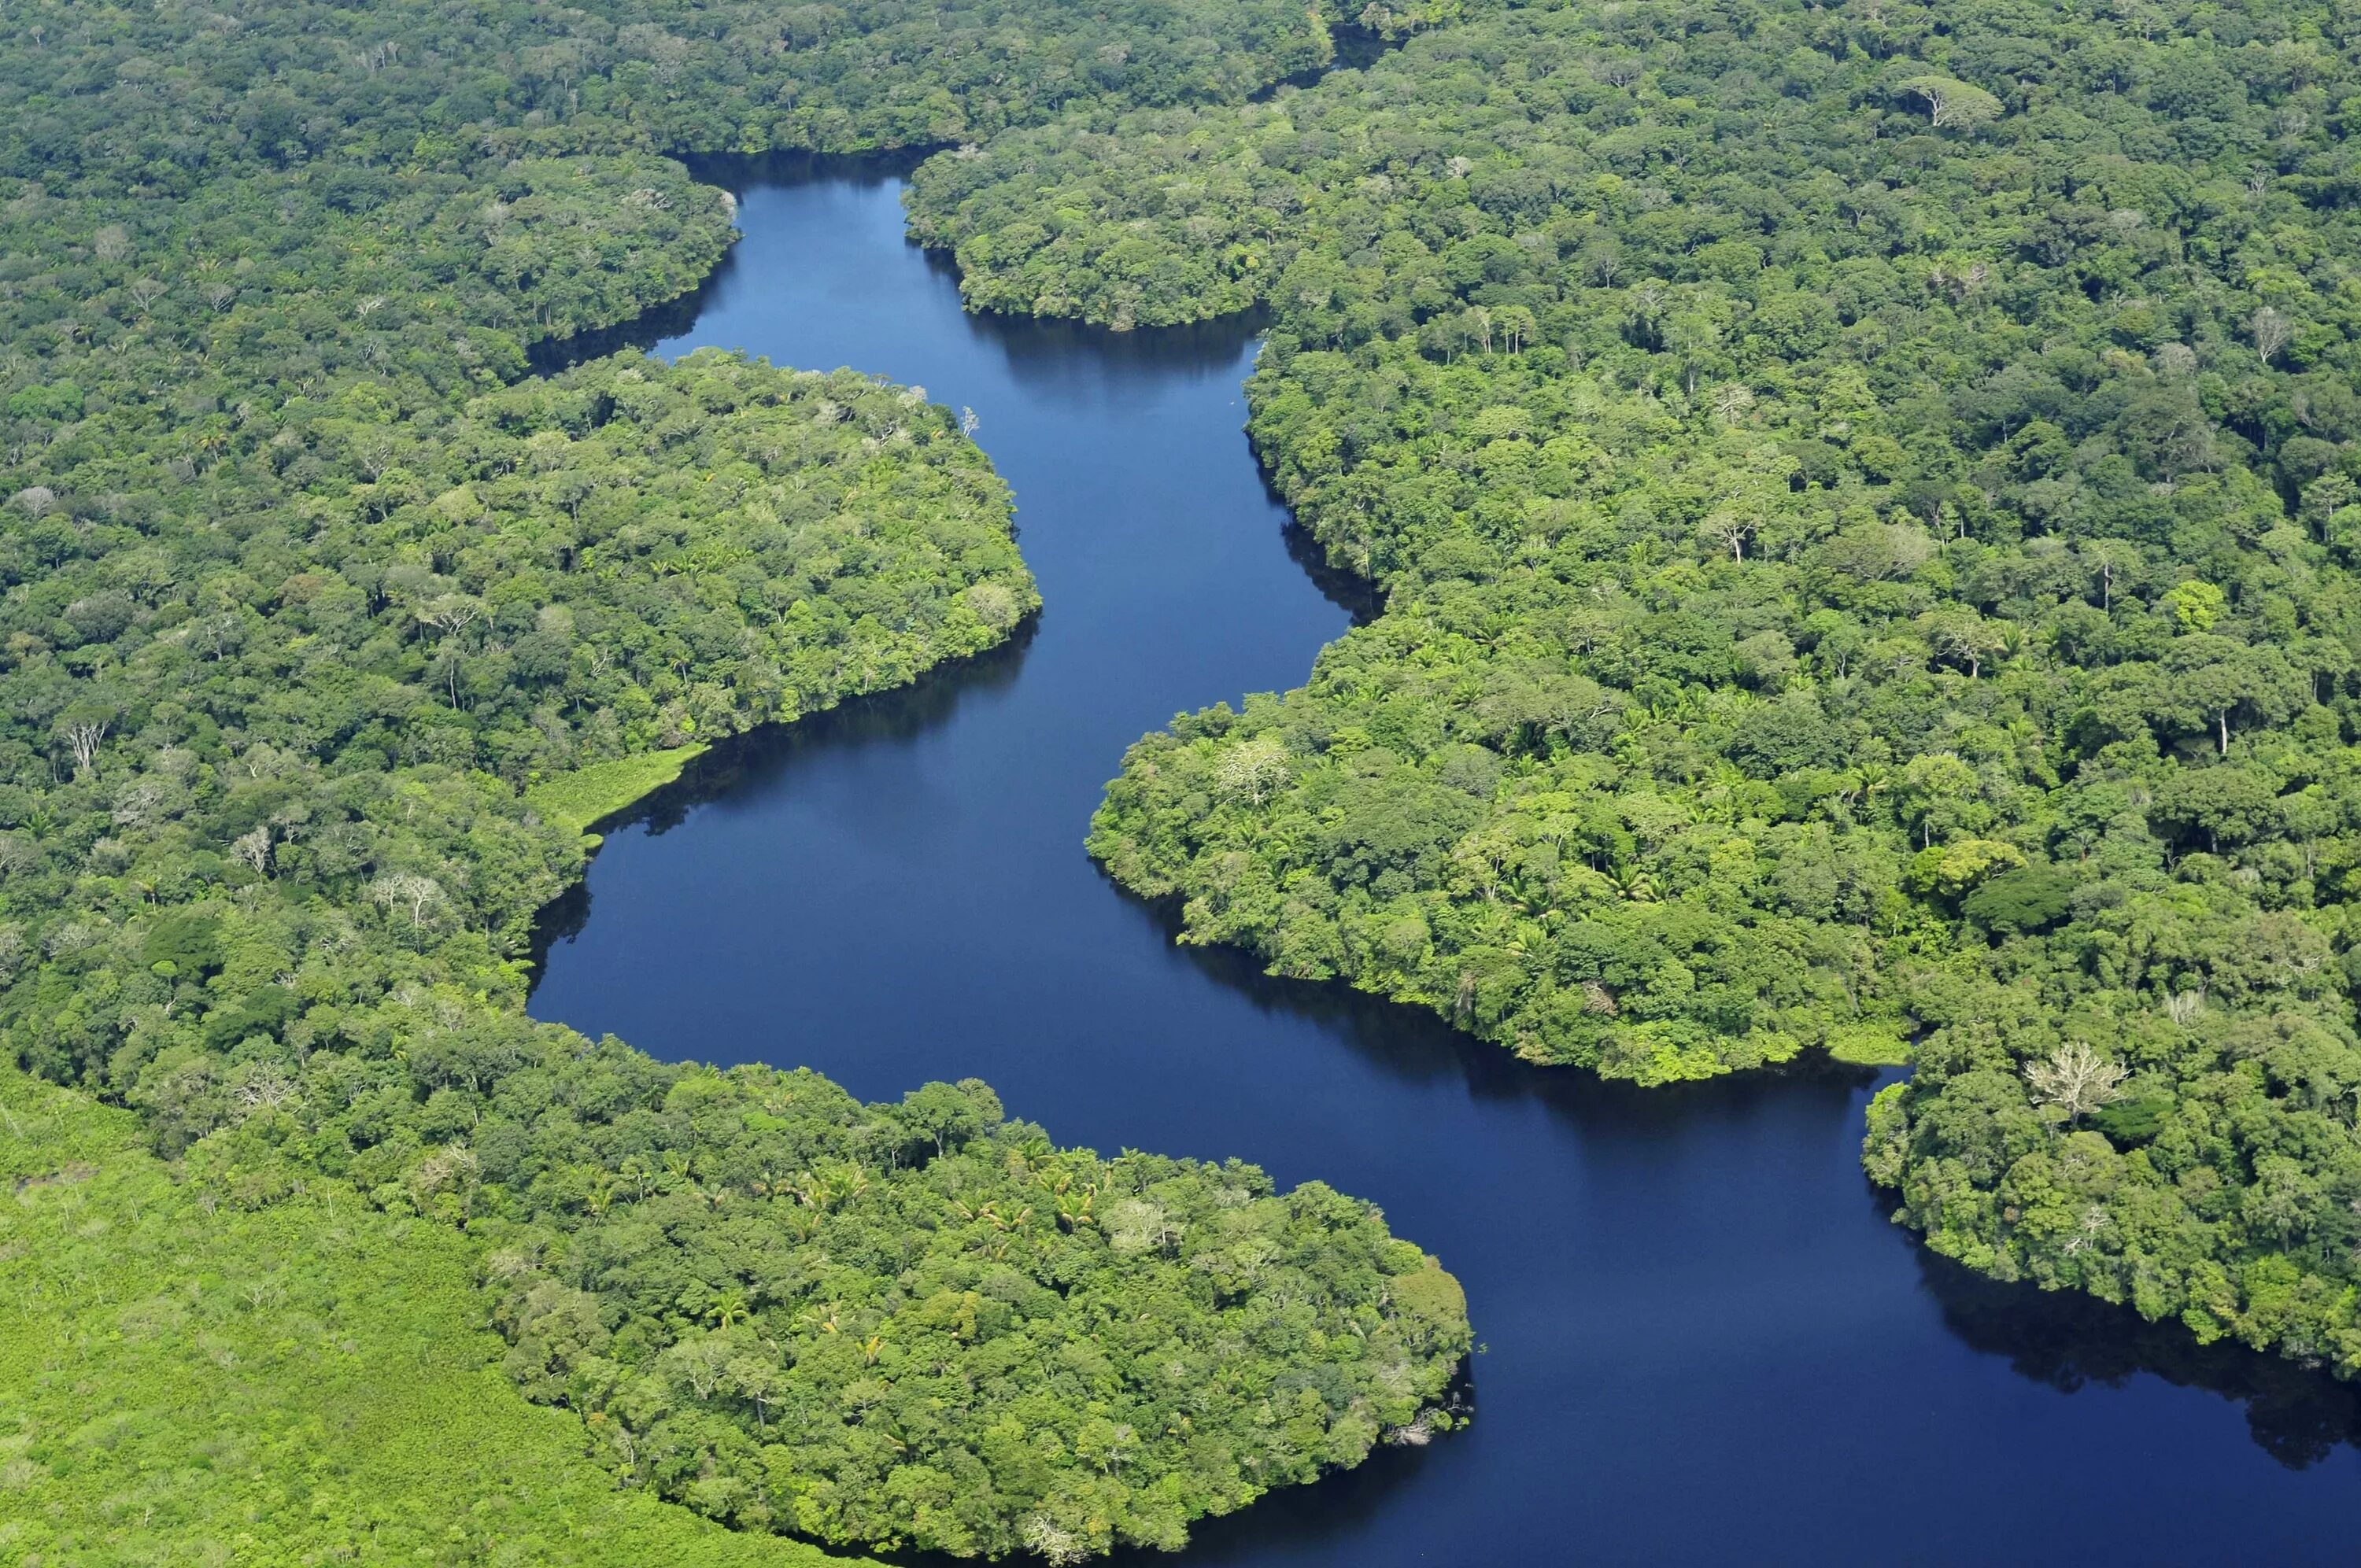 Amazon borneo congo. Сельва амазонки Бразилия. Бразилия тропические леса Сельва. Сельва Южной Америки.